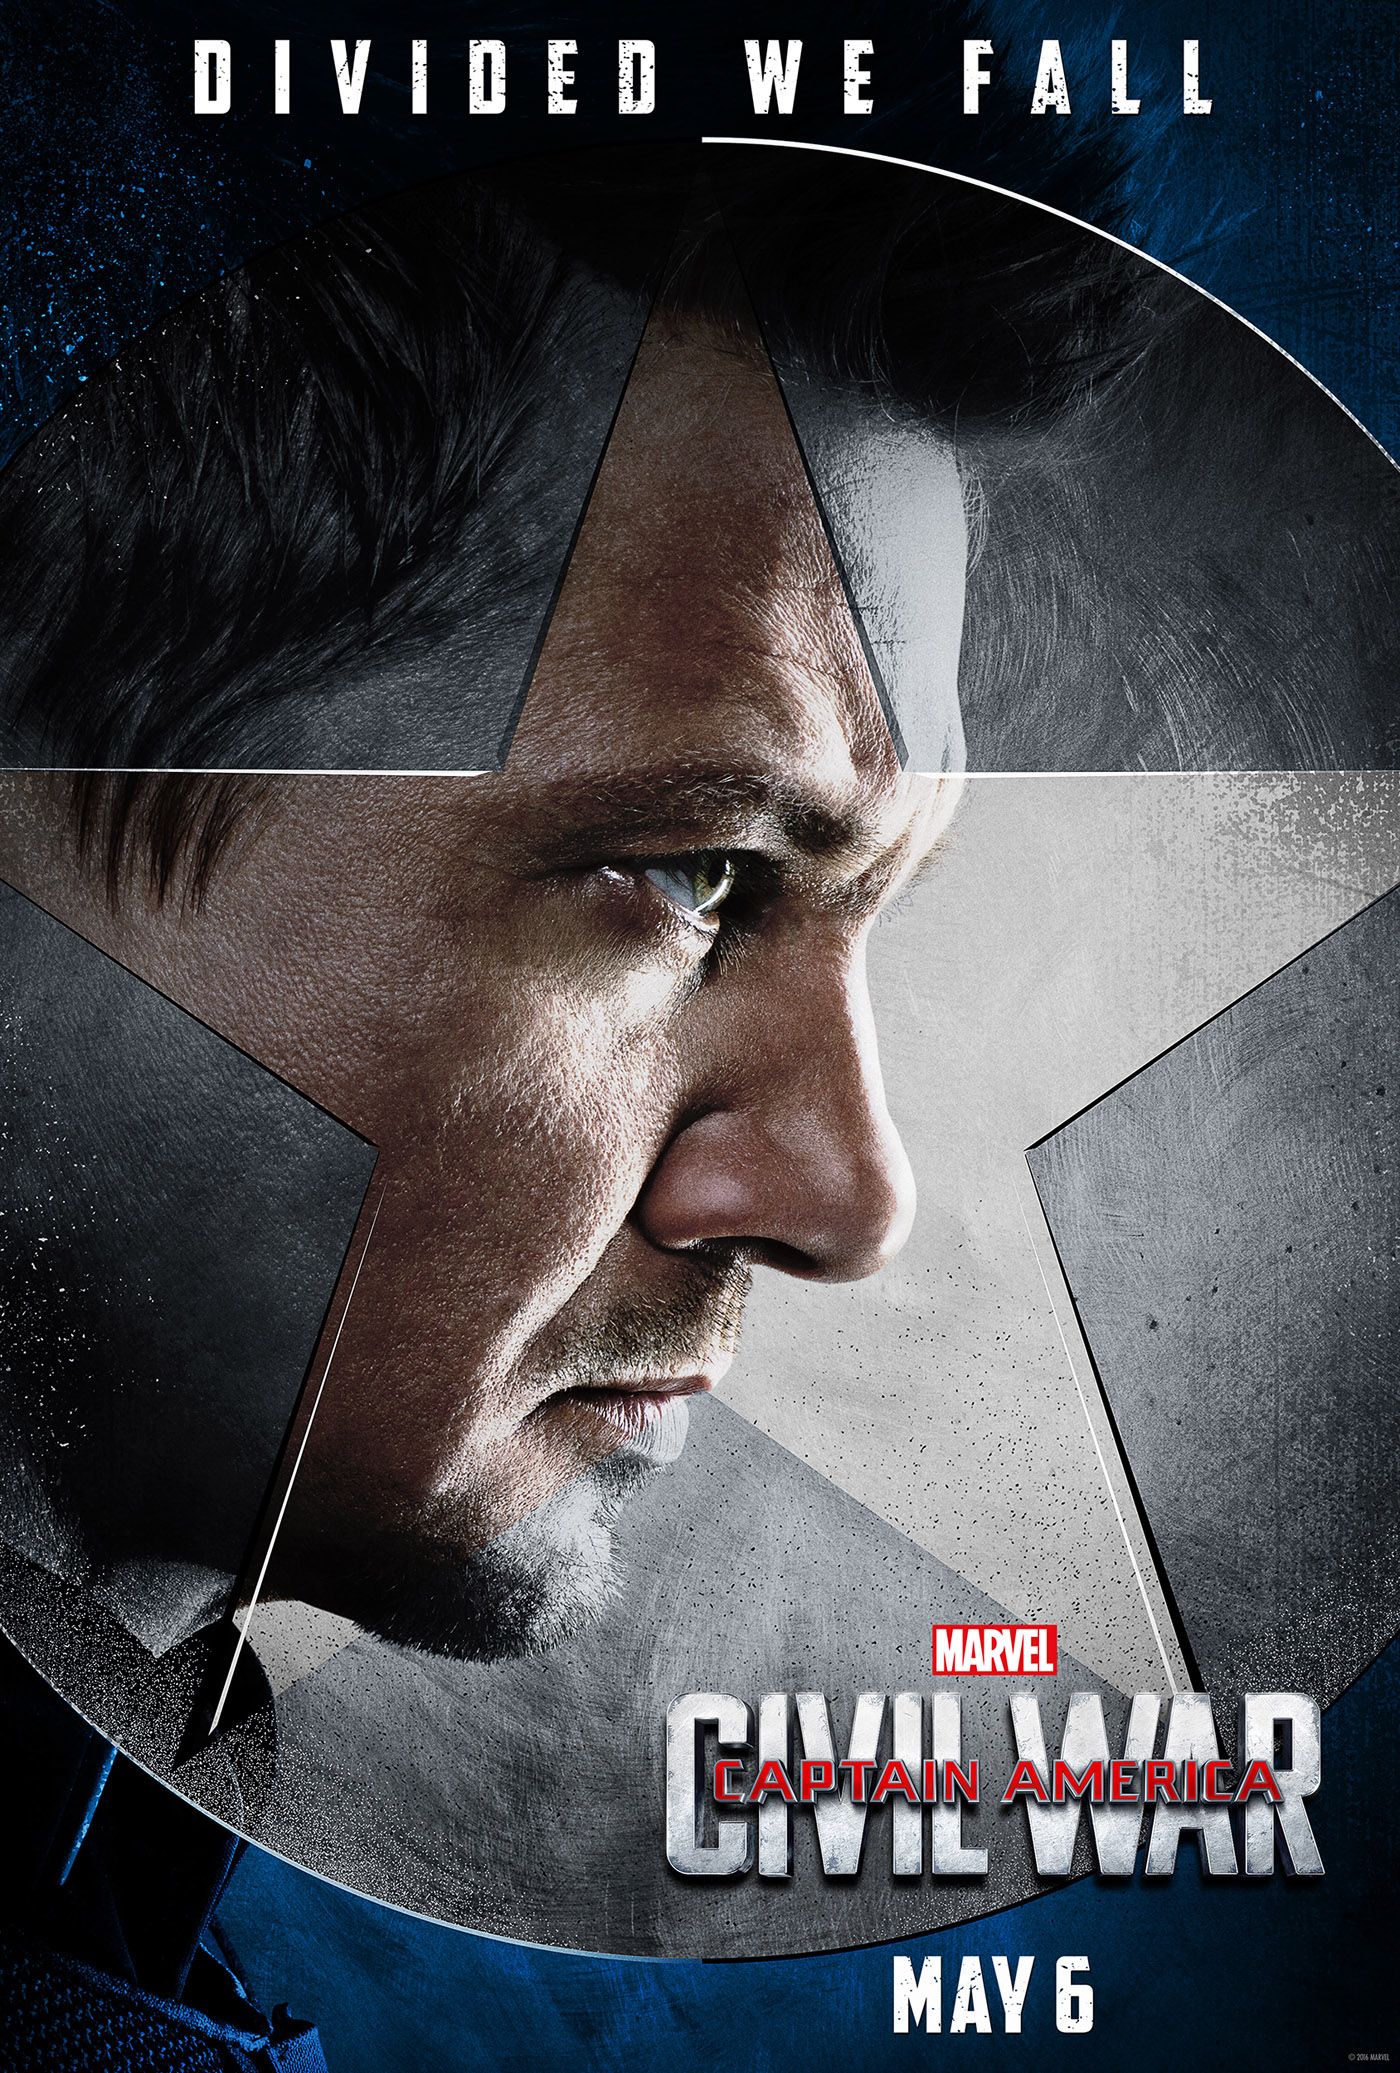 Captain America: Civil War Character Poster - Hawkeye